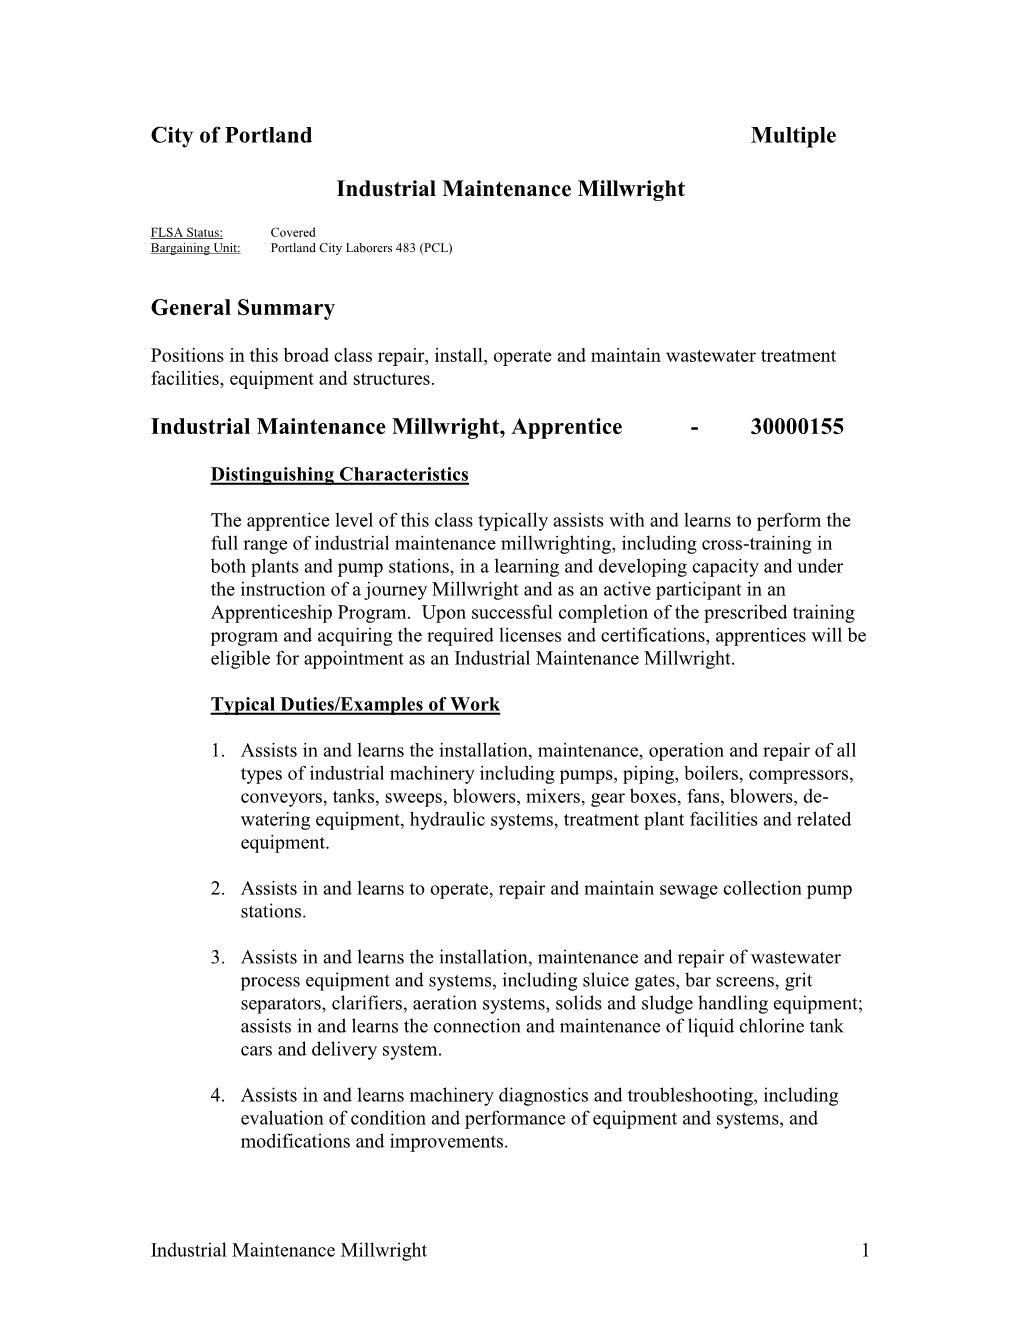 Industrial Maintenance Millwright Series